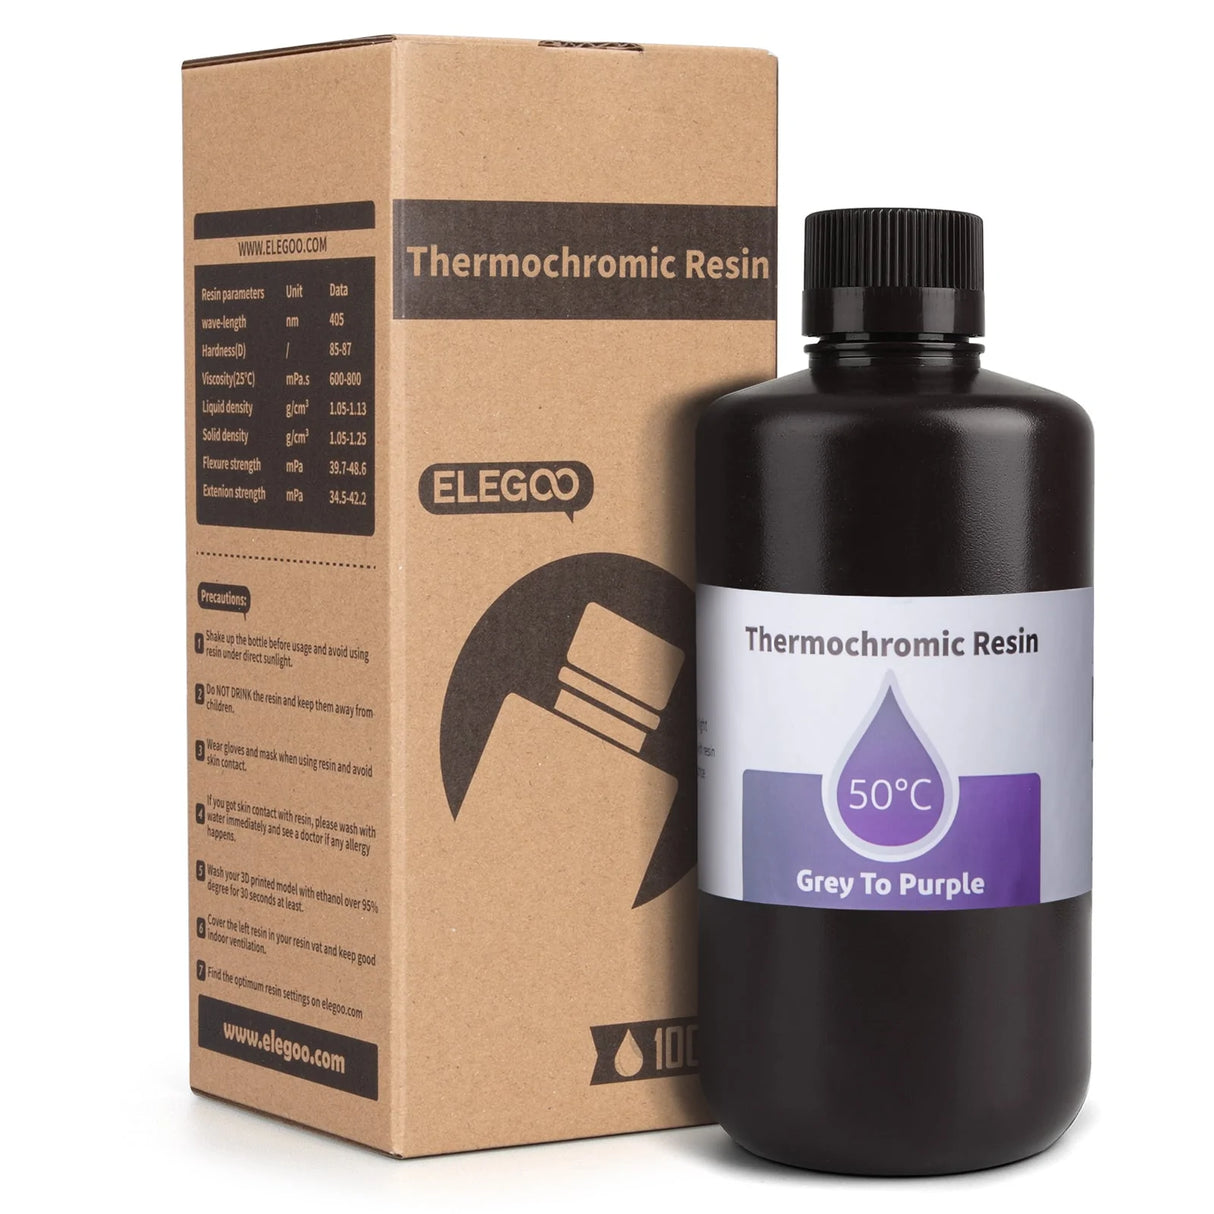 Thermochromic Resin